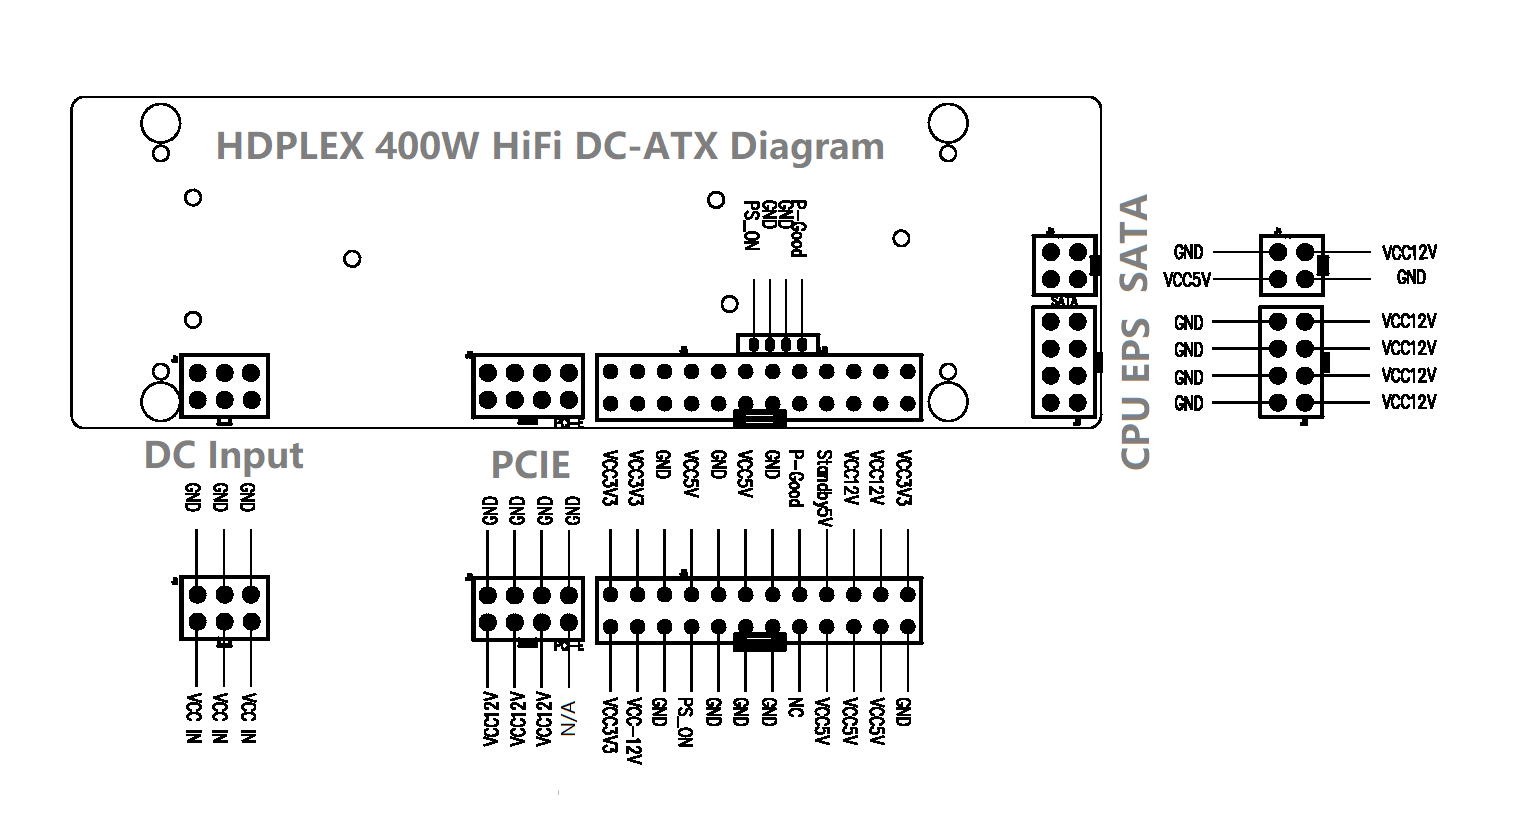 HDPlex 400w HiFi DC-ATX Next Generation – | SFF.Network